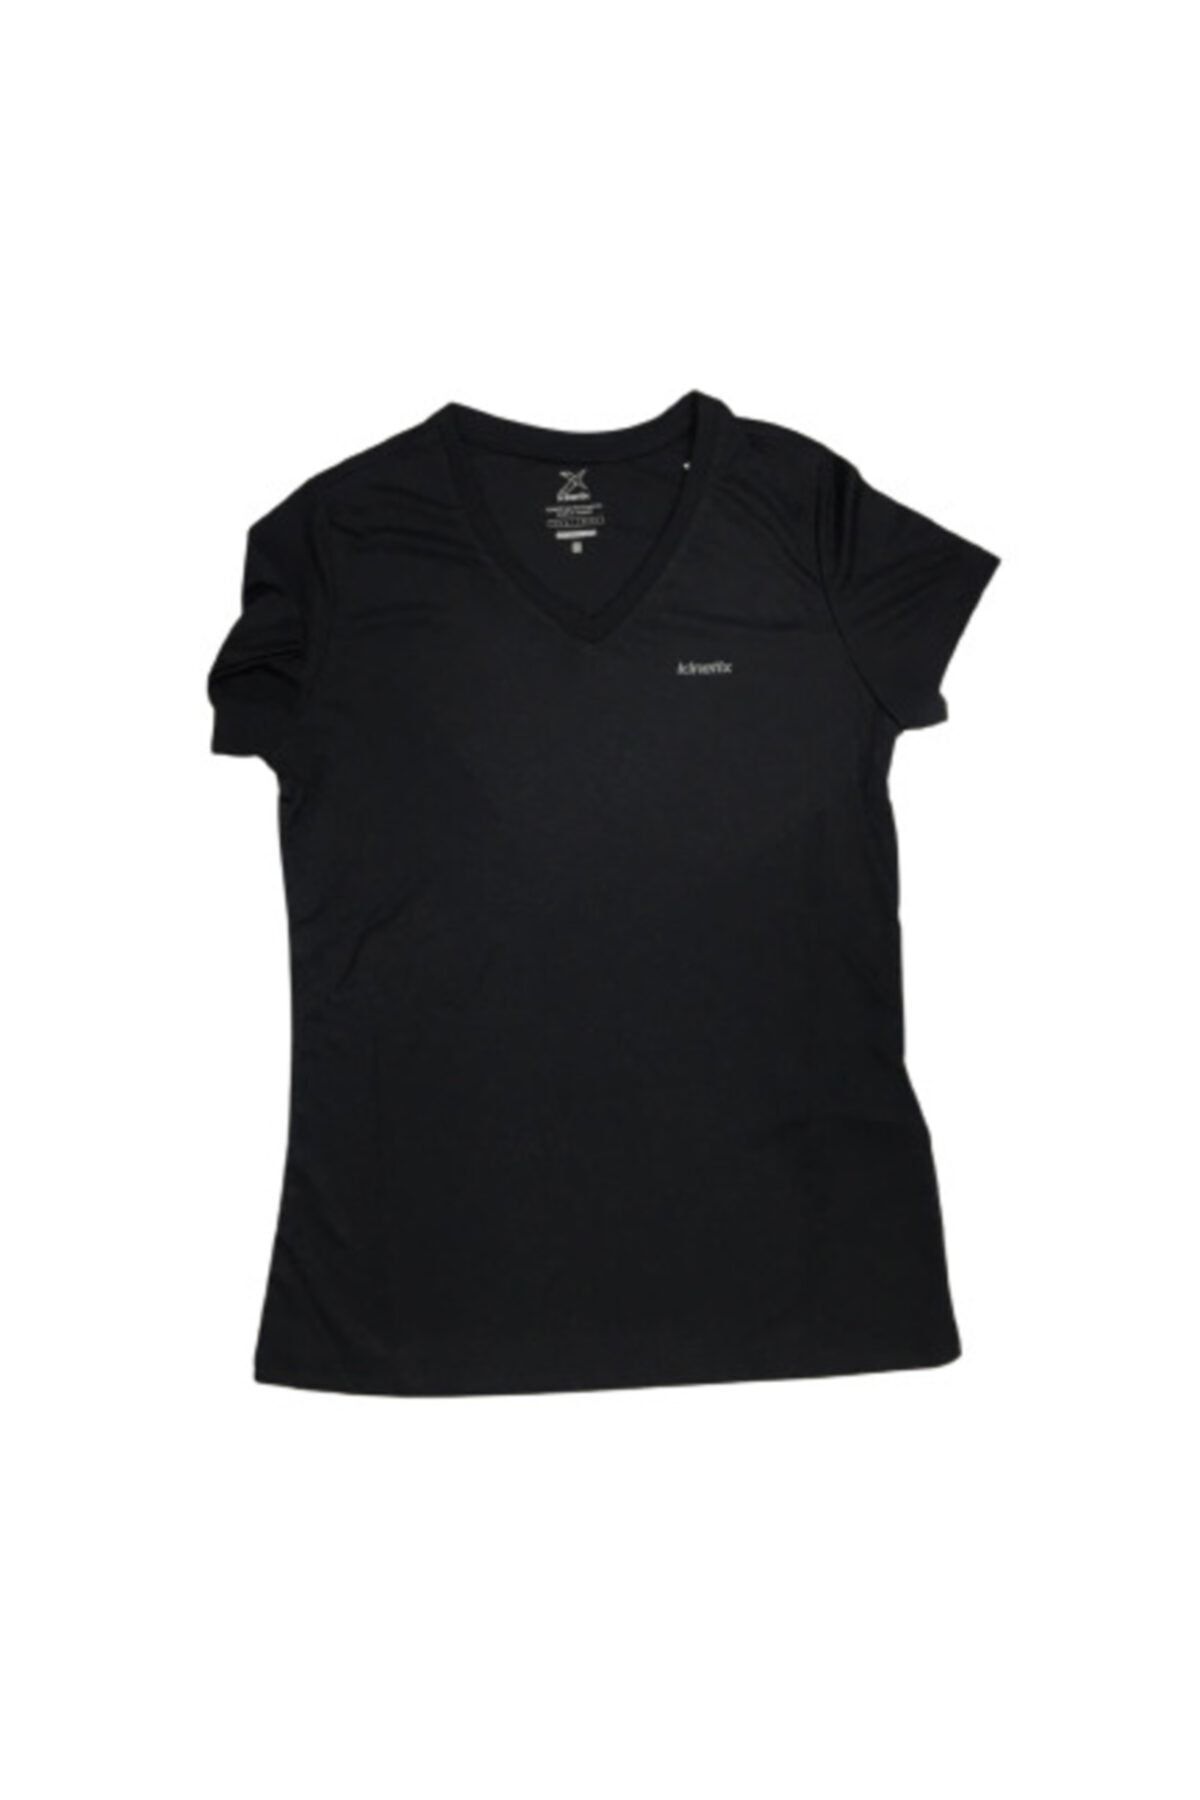 Kinetix Sn228 Basıc Pes V Neck Siyah Kadın Kısa Kol T-shirt